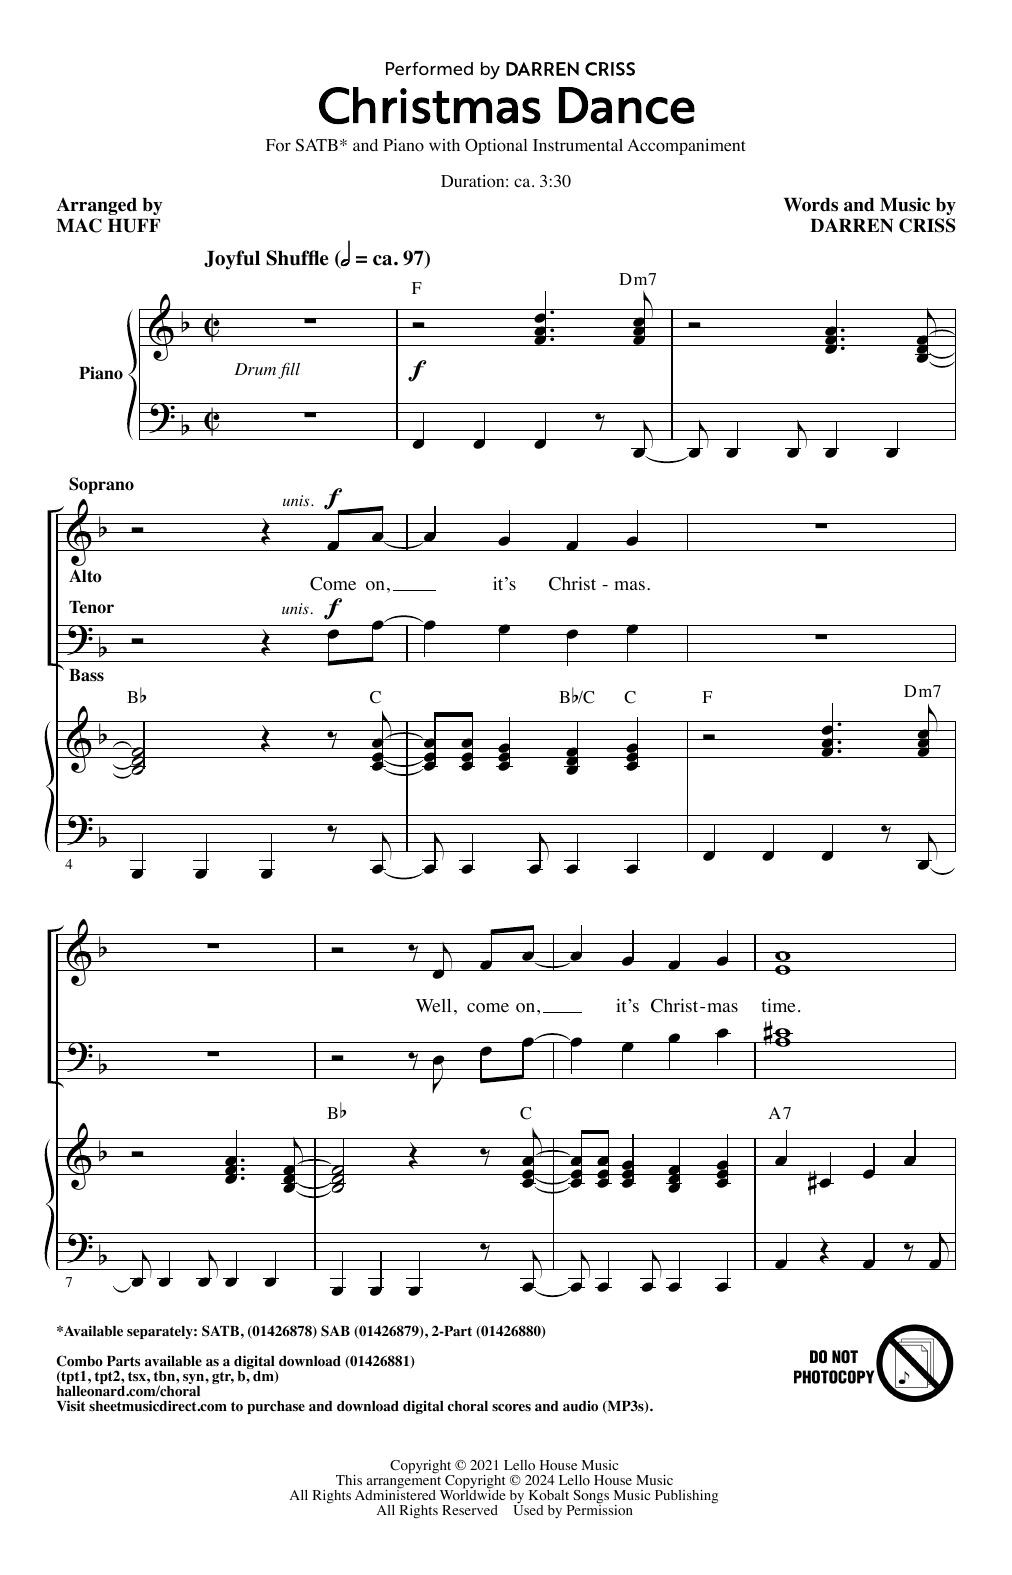 Darren Criss Christmas Dance (arr. Mac Huff) sheet music notes and chords arranged for SATB Choir